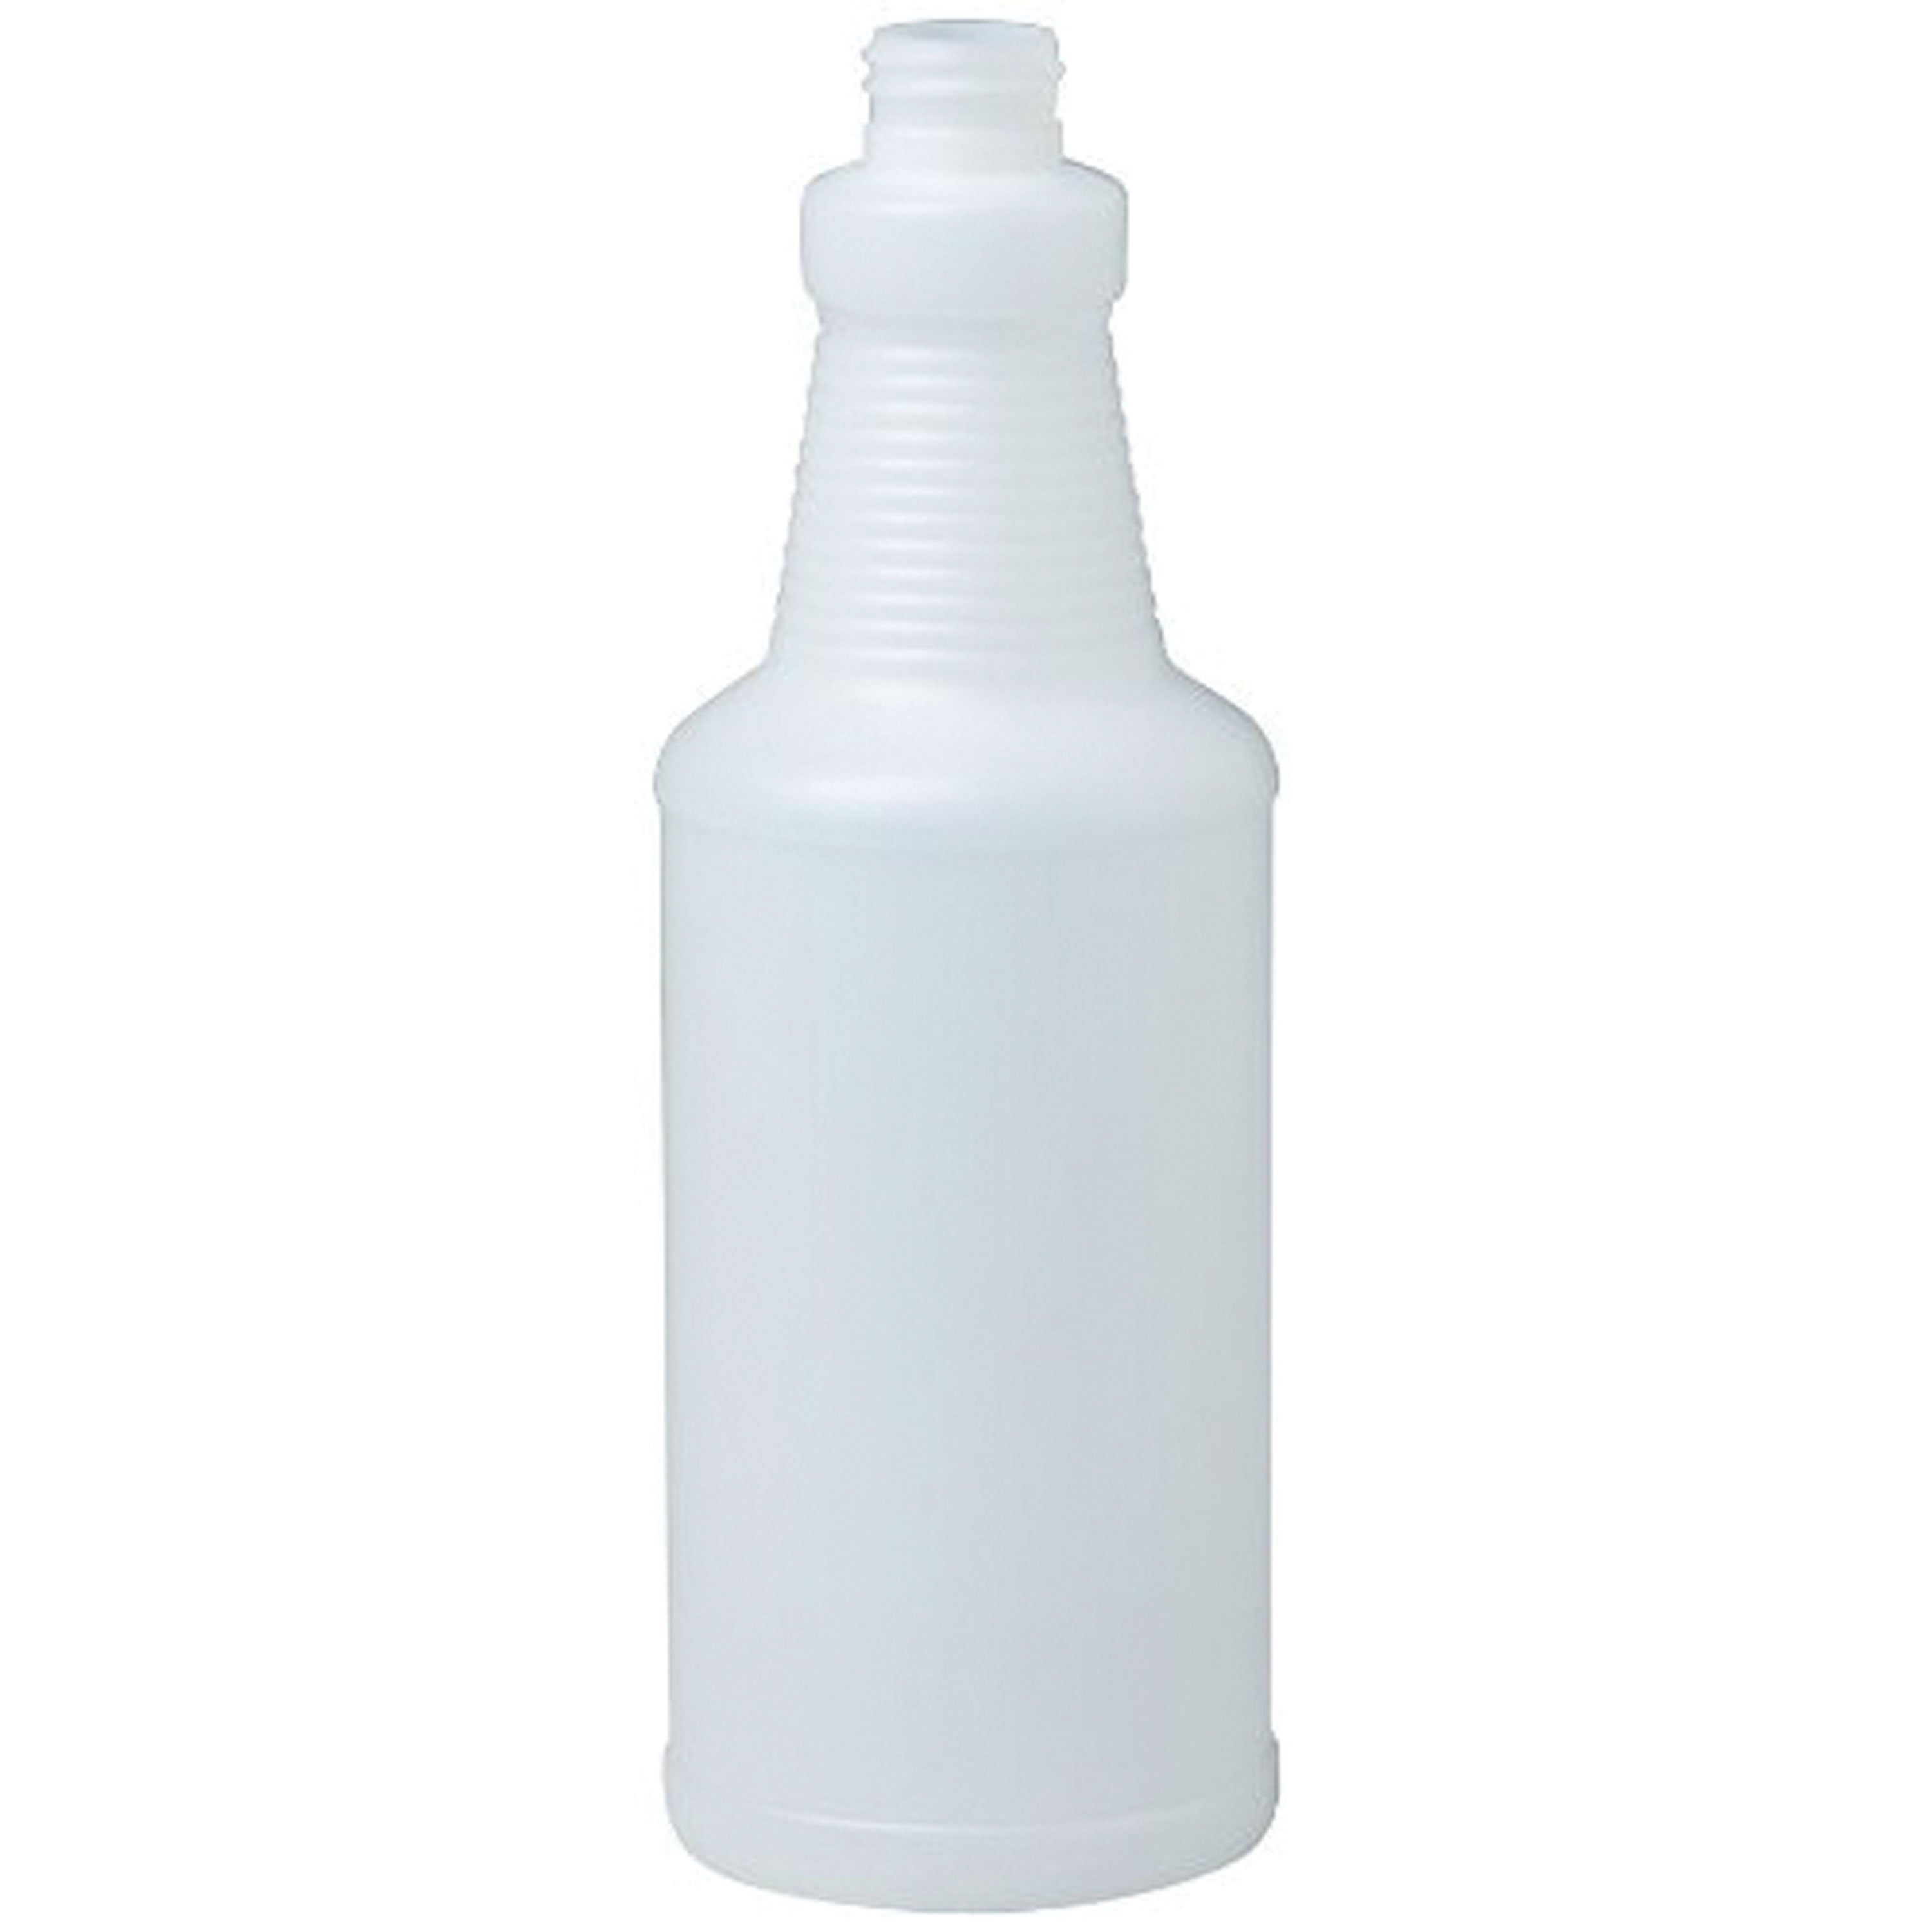 3M 37716 Detailing Spray Bottle - 32 oz.